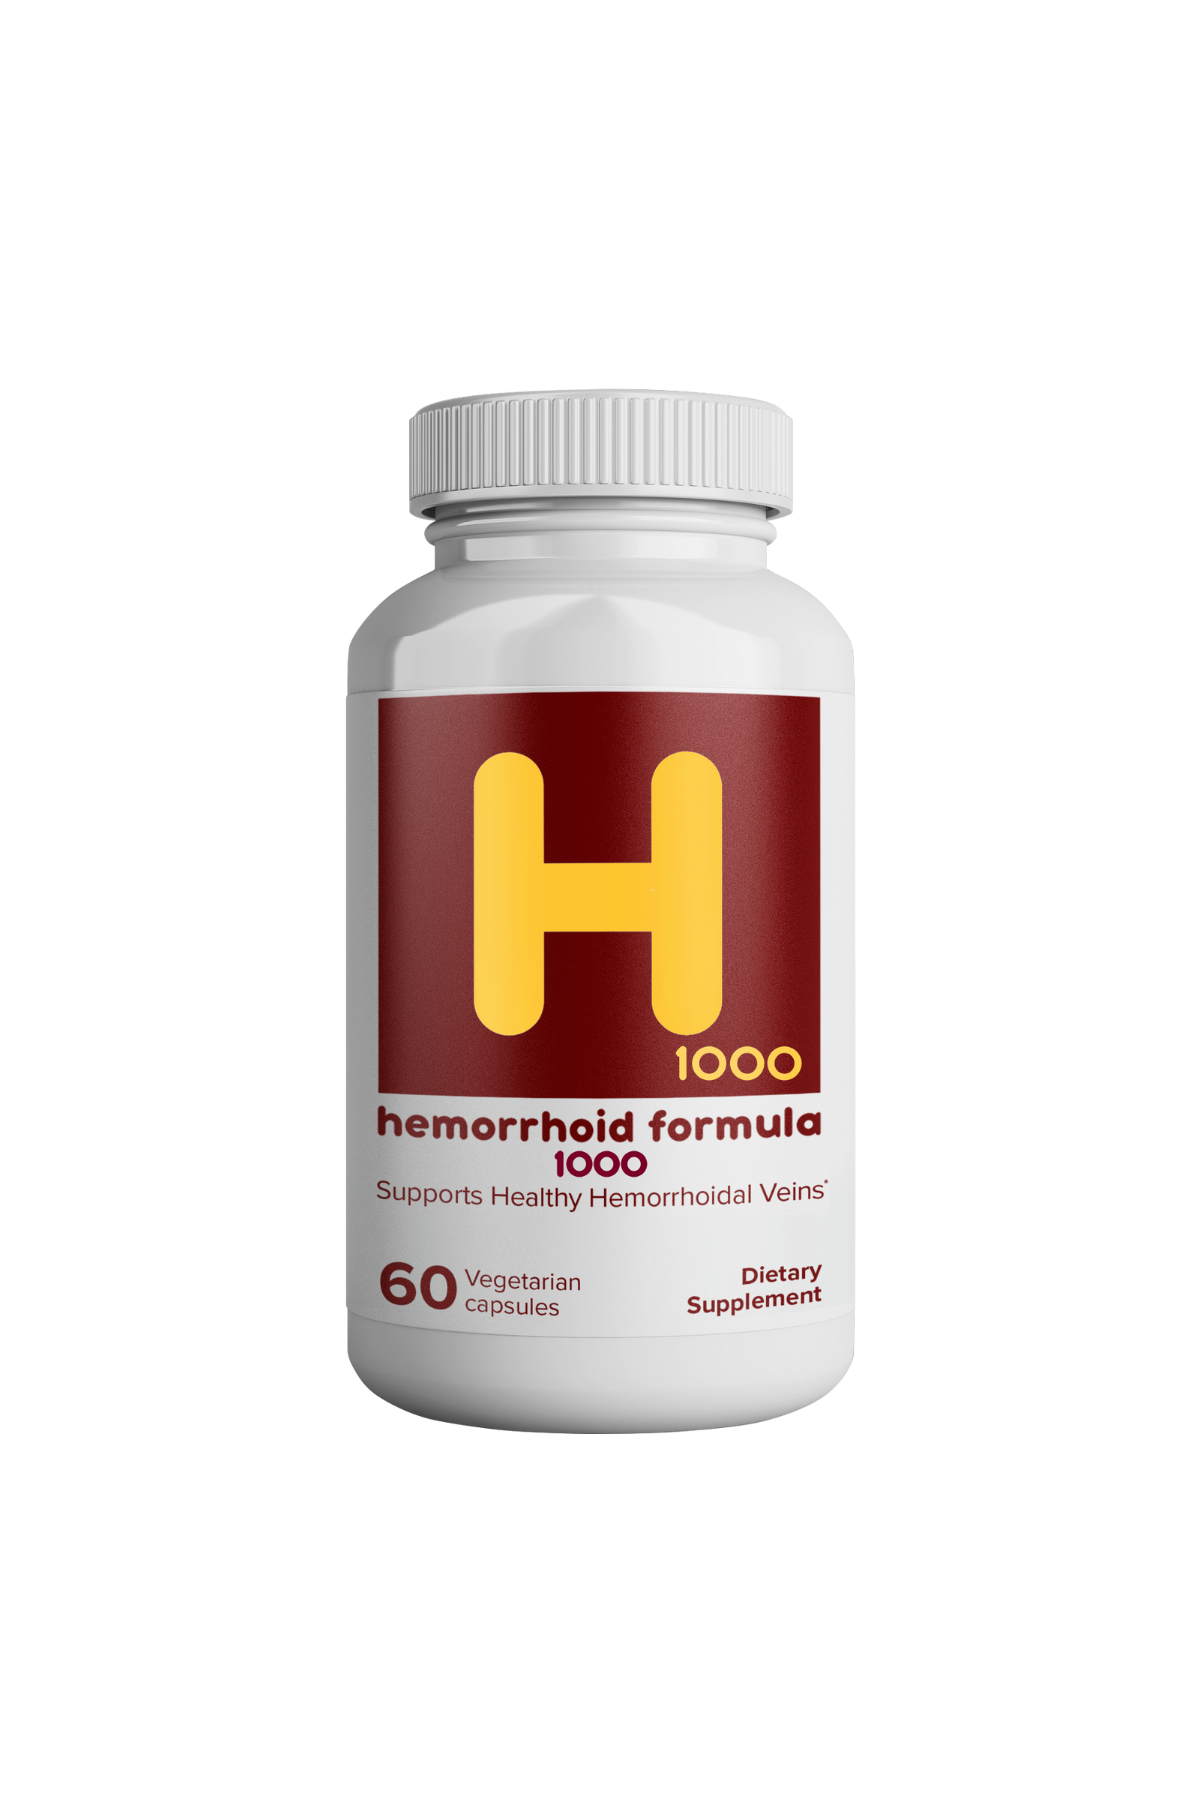 Hemorrohoid formula 1000